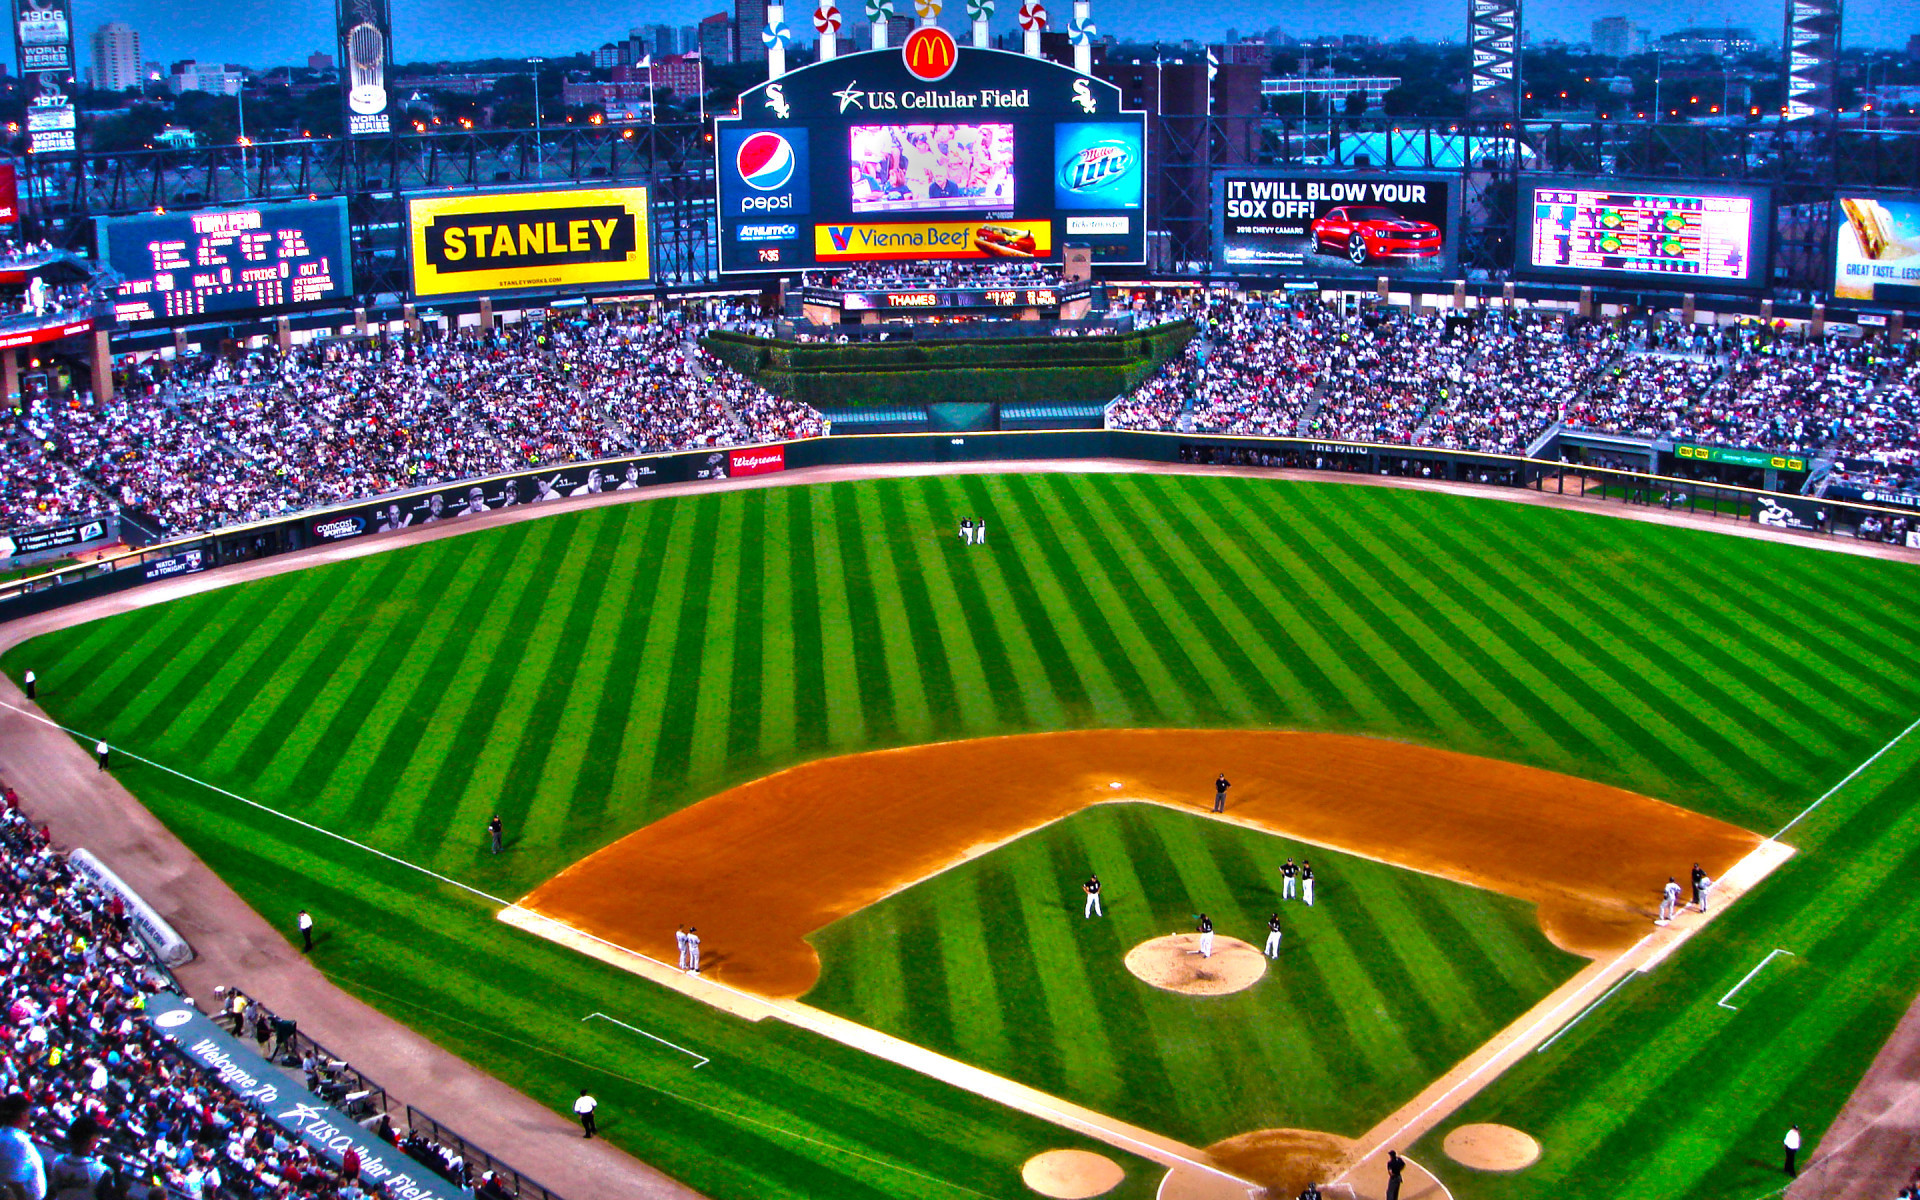 fond d'écran du stade de baseball,parc de baseball,stade,terrain de baseball,joueur de baseball,base ball